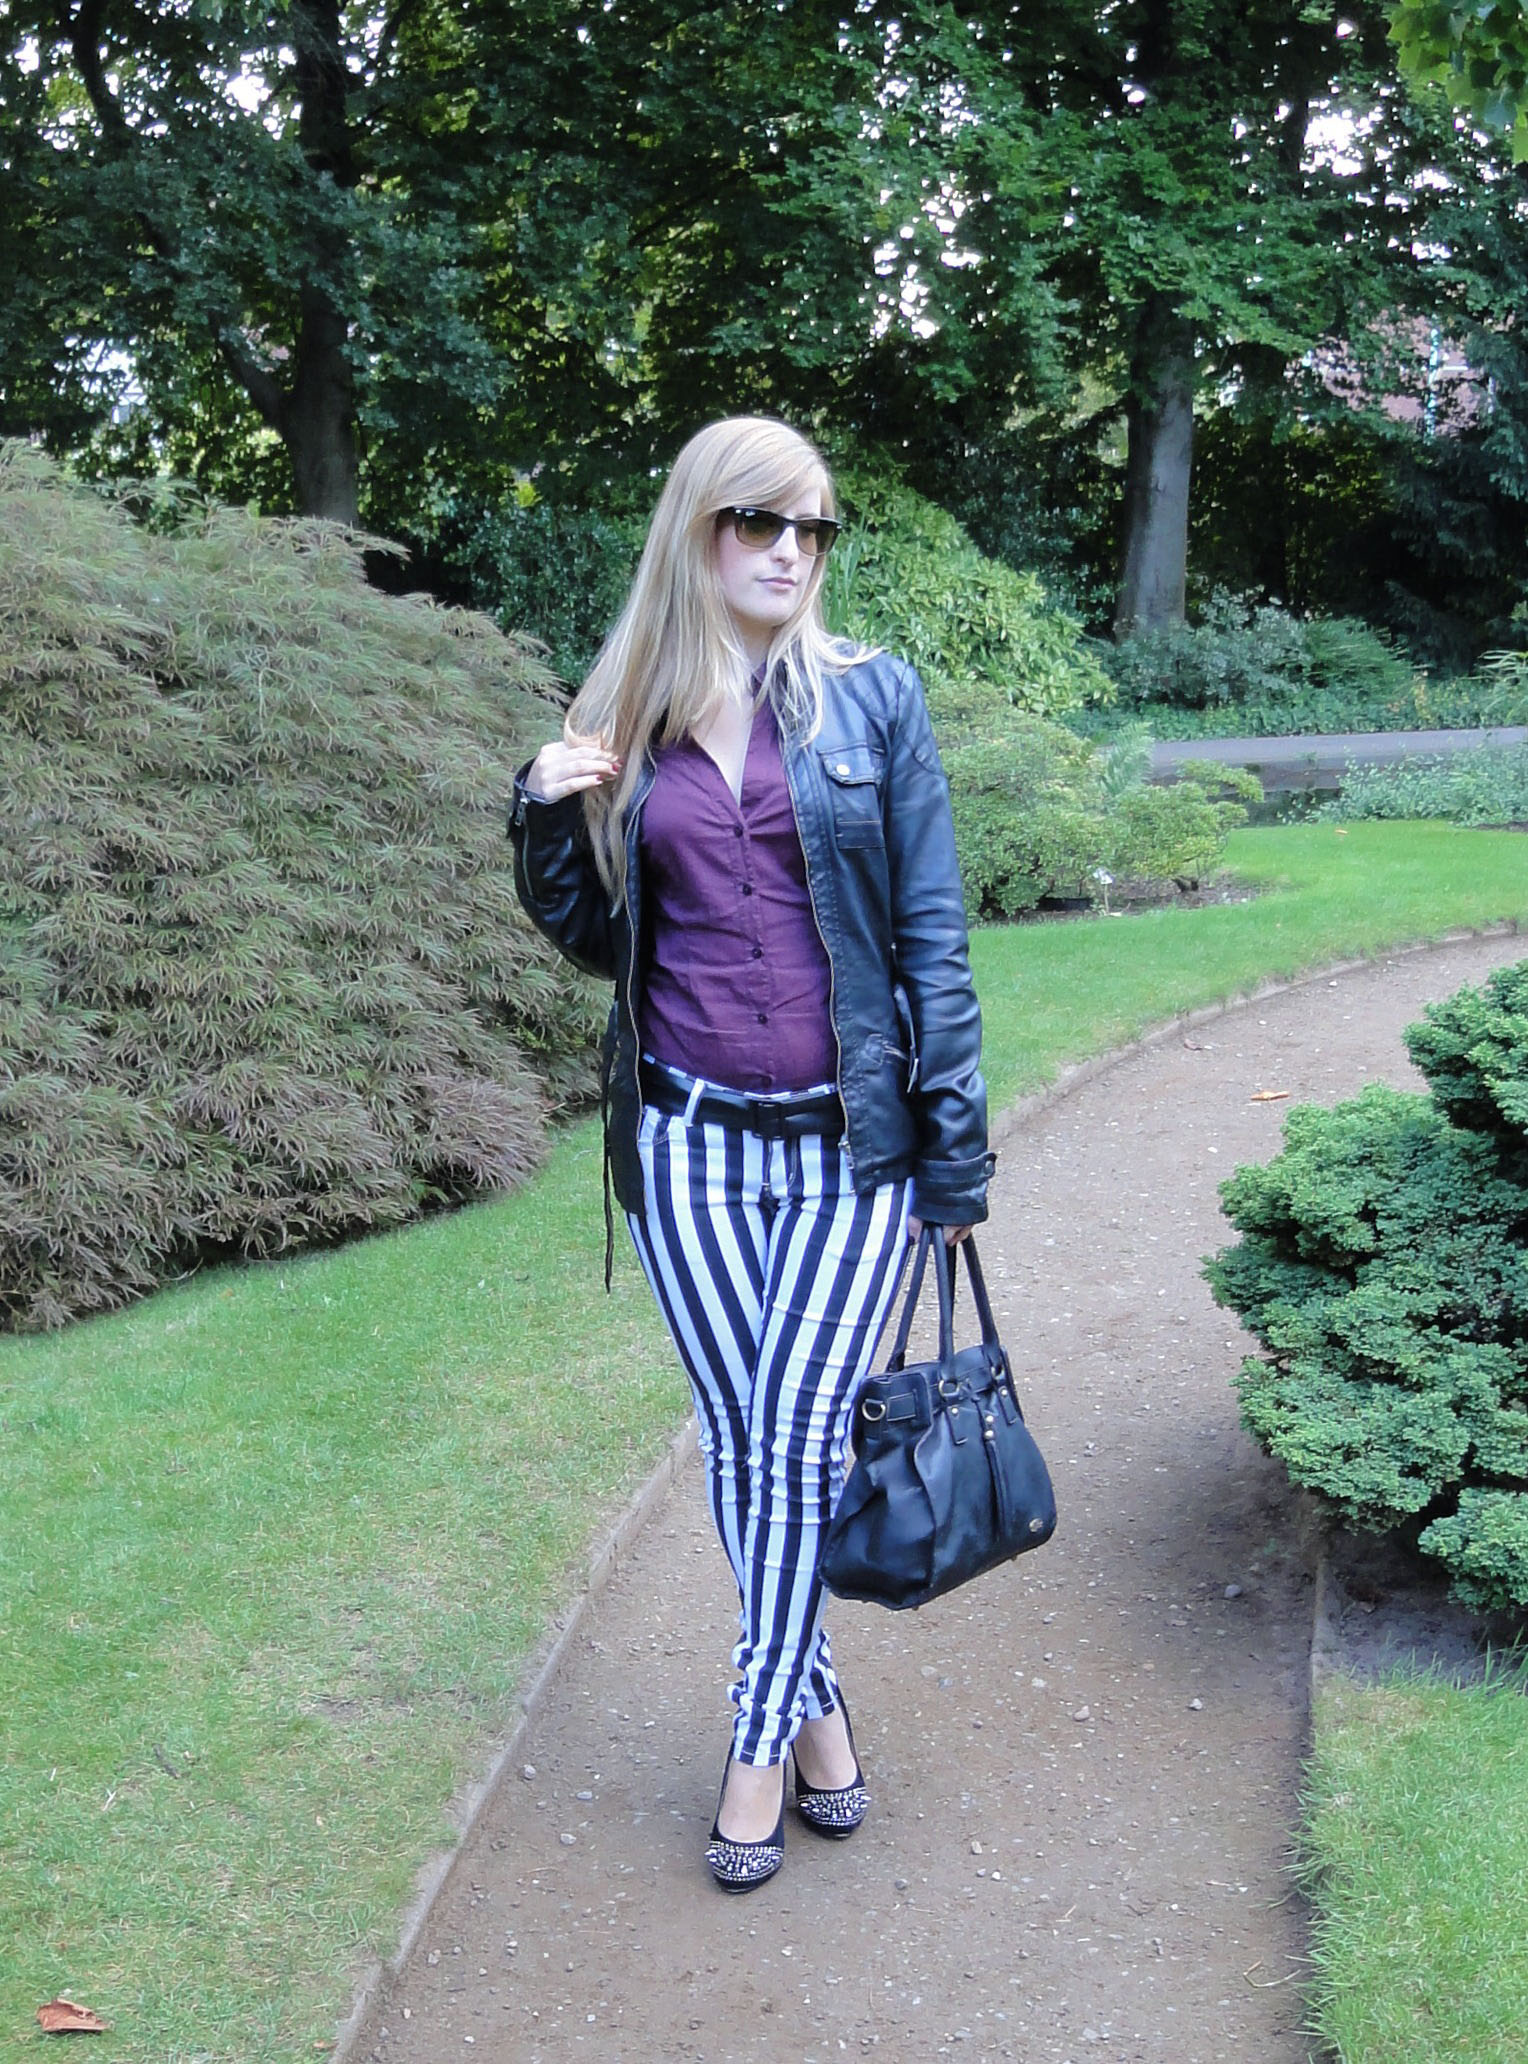 Stripes Rules Modeblog schwarz weiß gestreifte Hose kombinieren streifen Outfit schwarze Lederjacke jajpanischer Garten 3